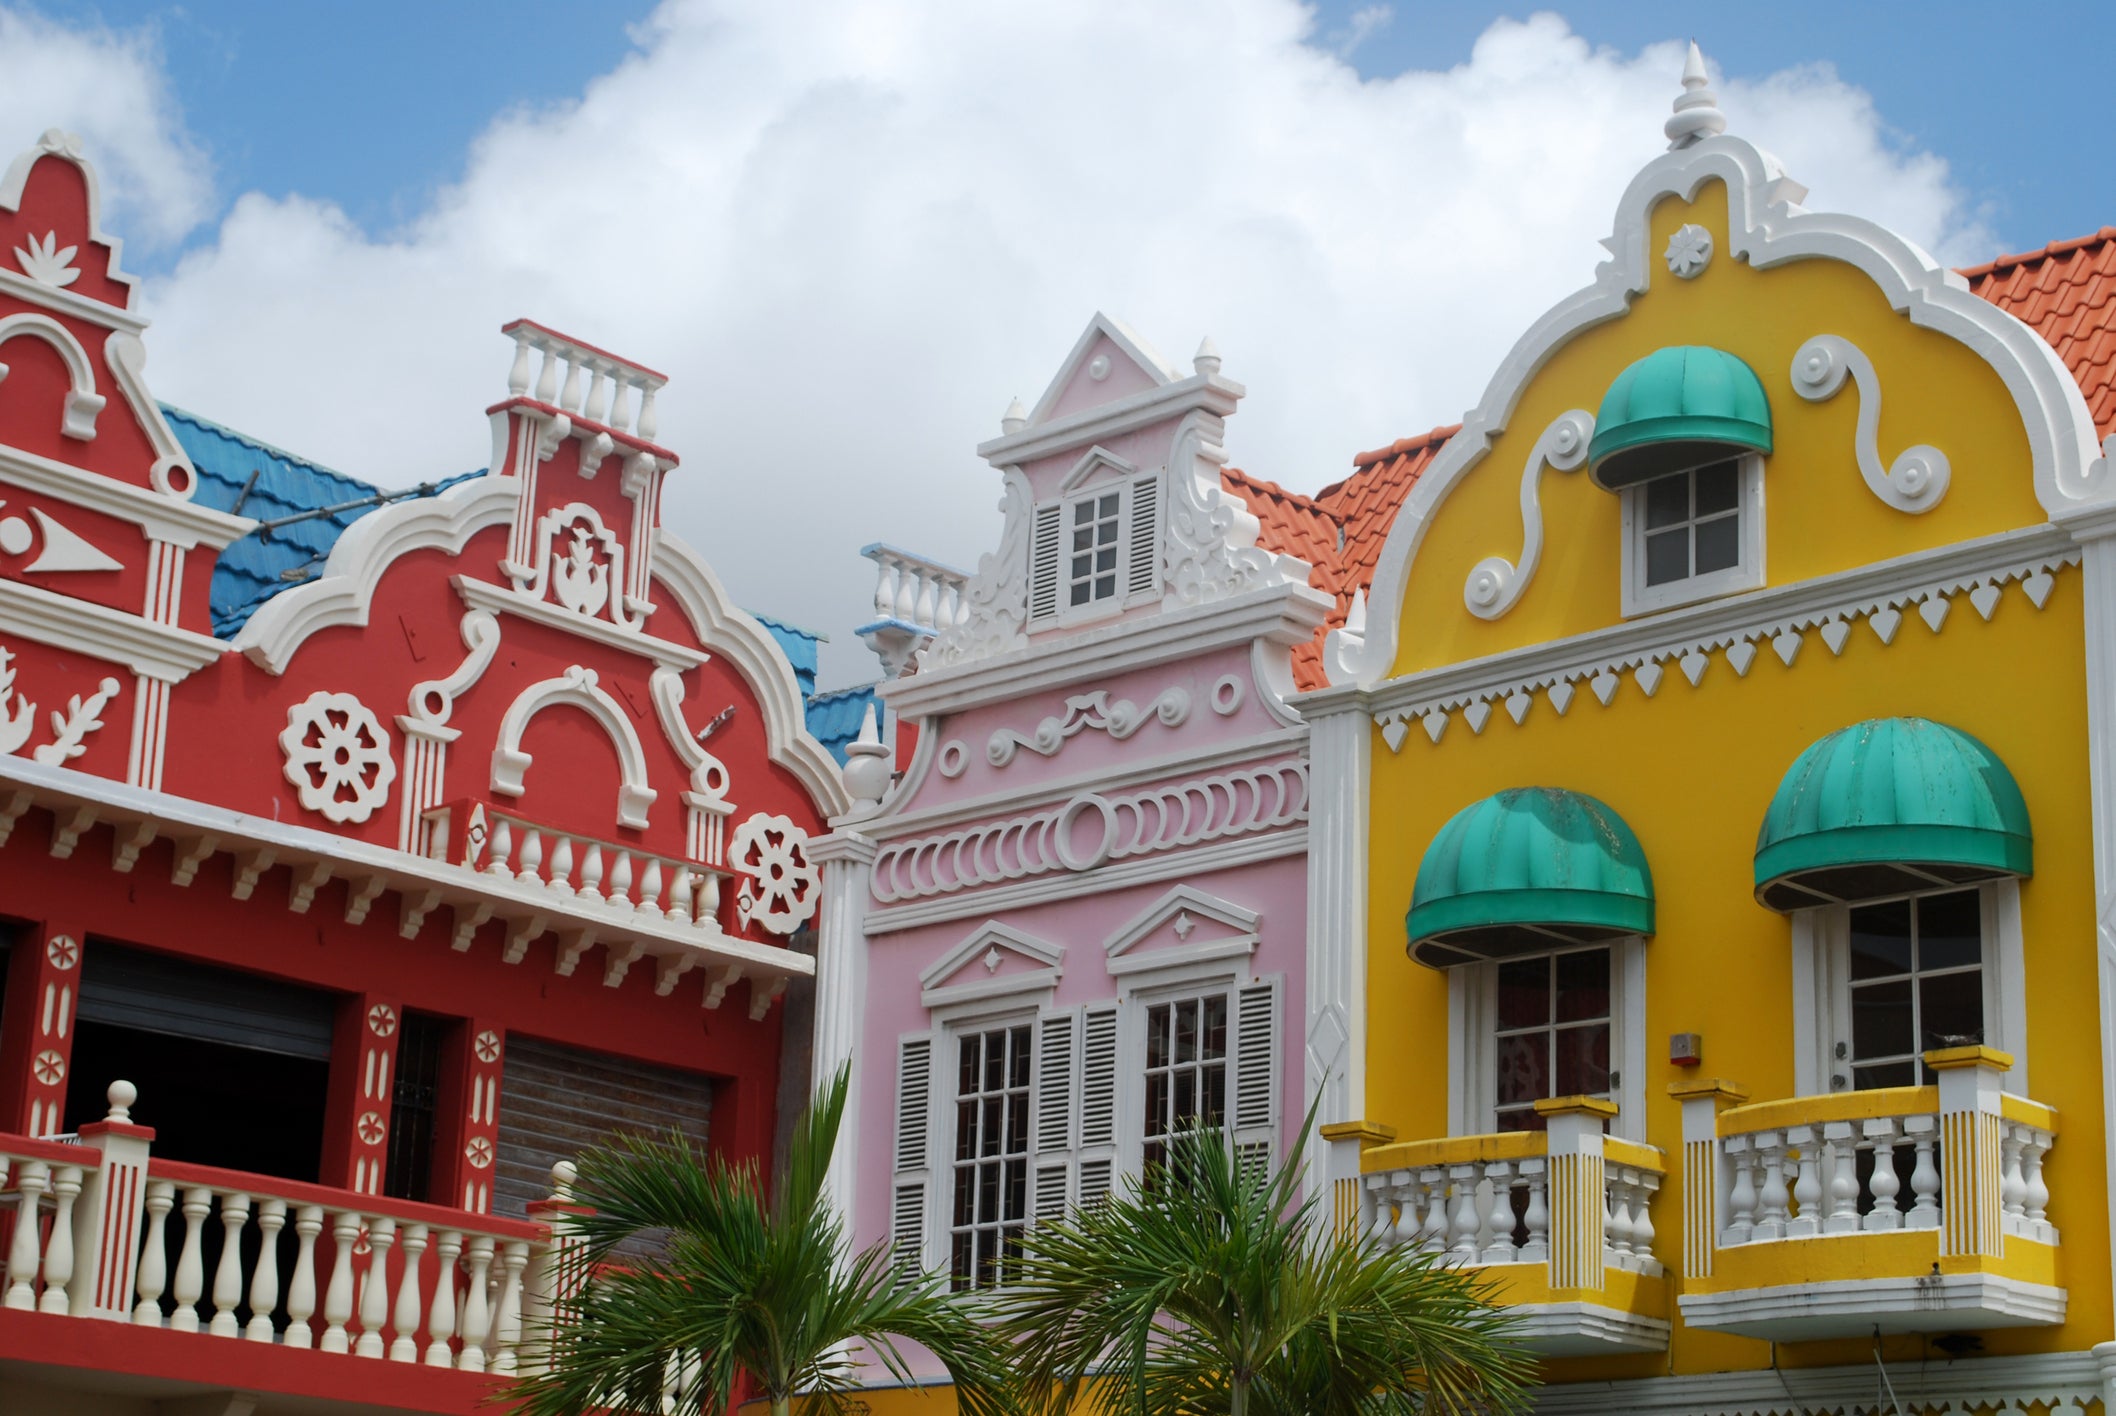 Aruba’s capital Oranjestad has colourful Dutch colonial architecture